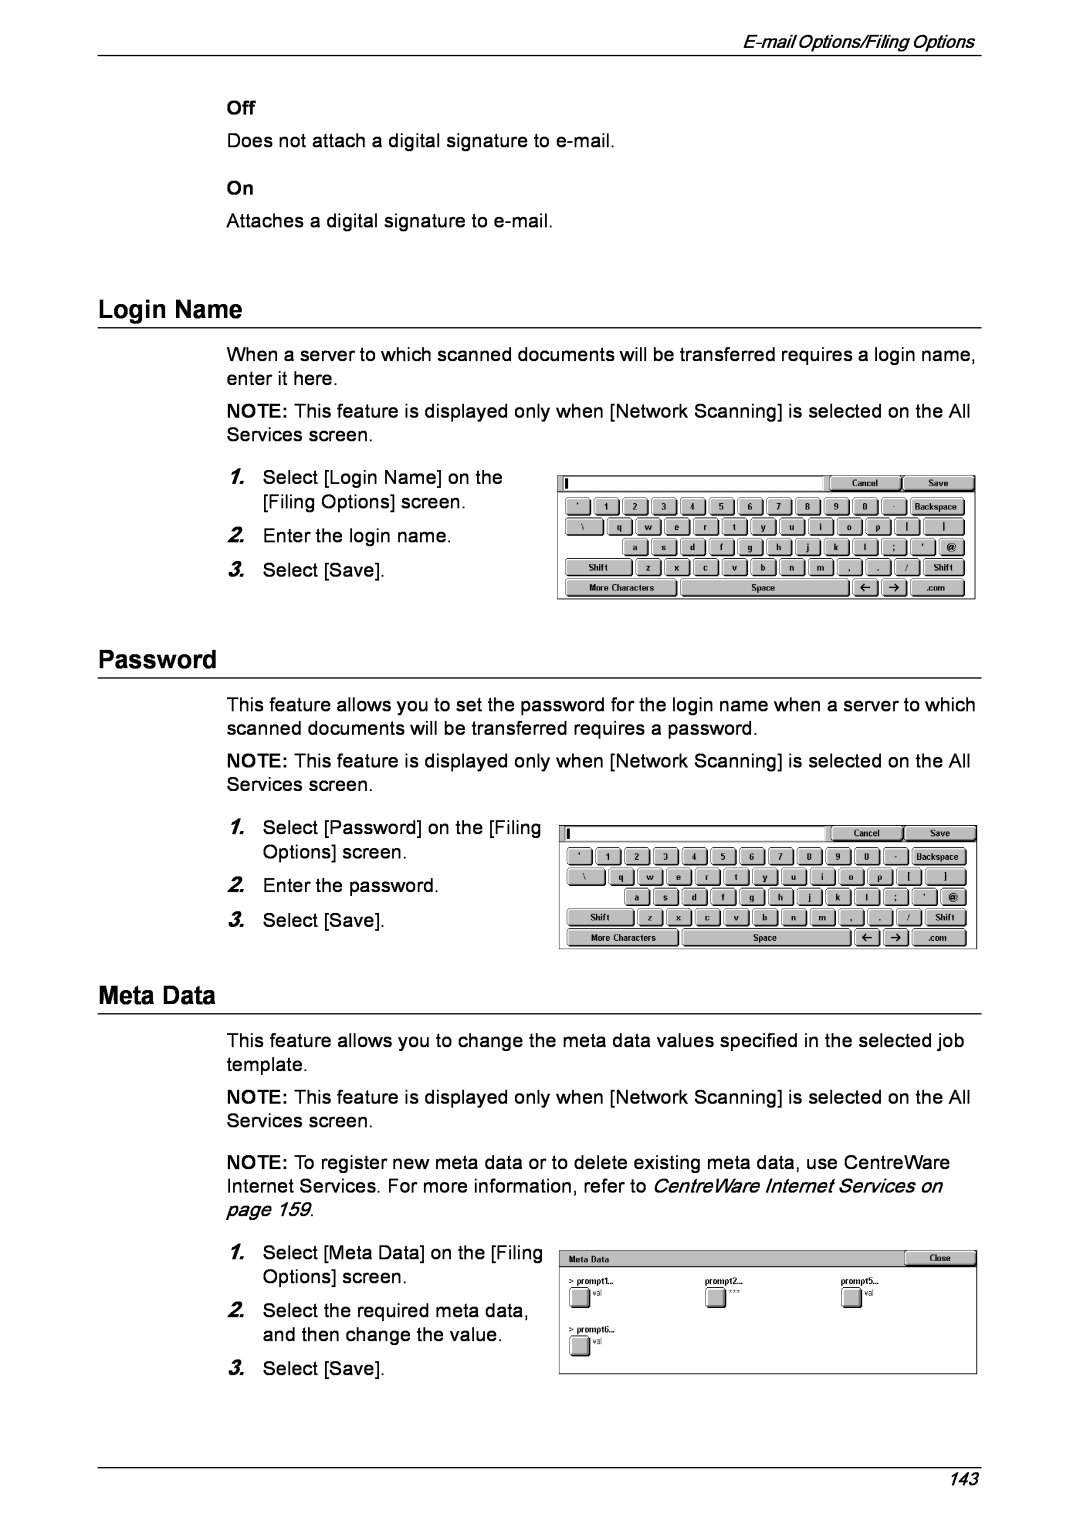 Xerox 5230 manual Login Name, Password, Meta Data 